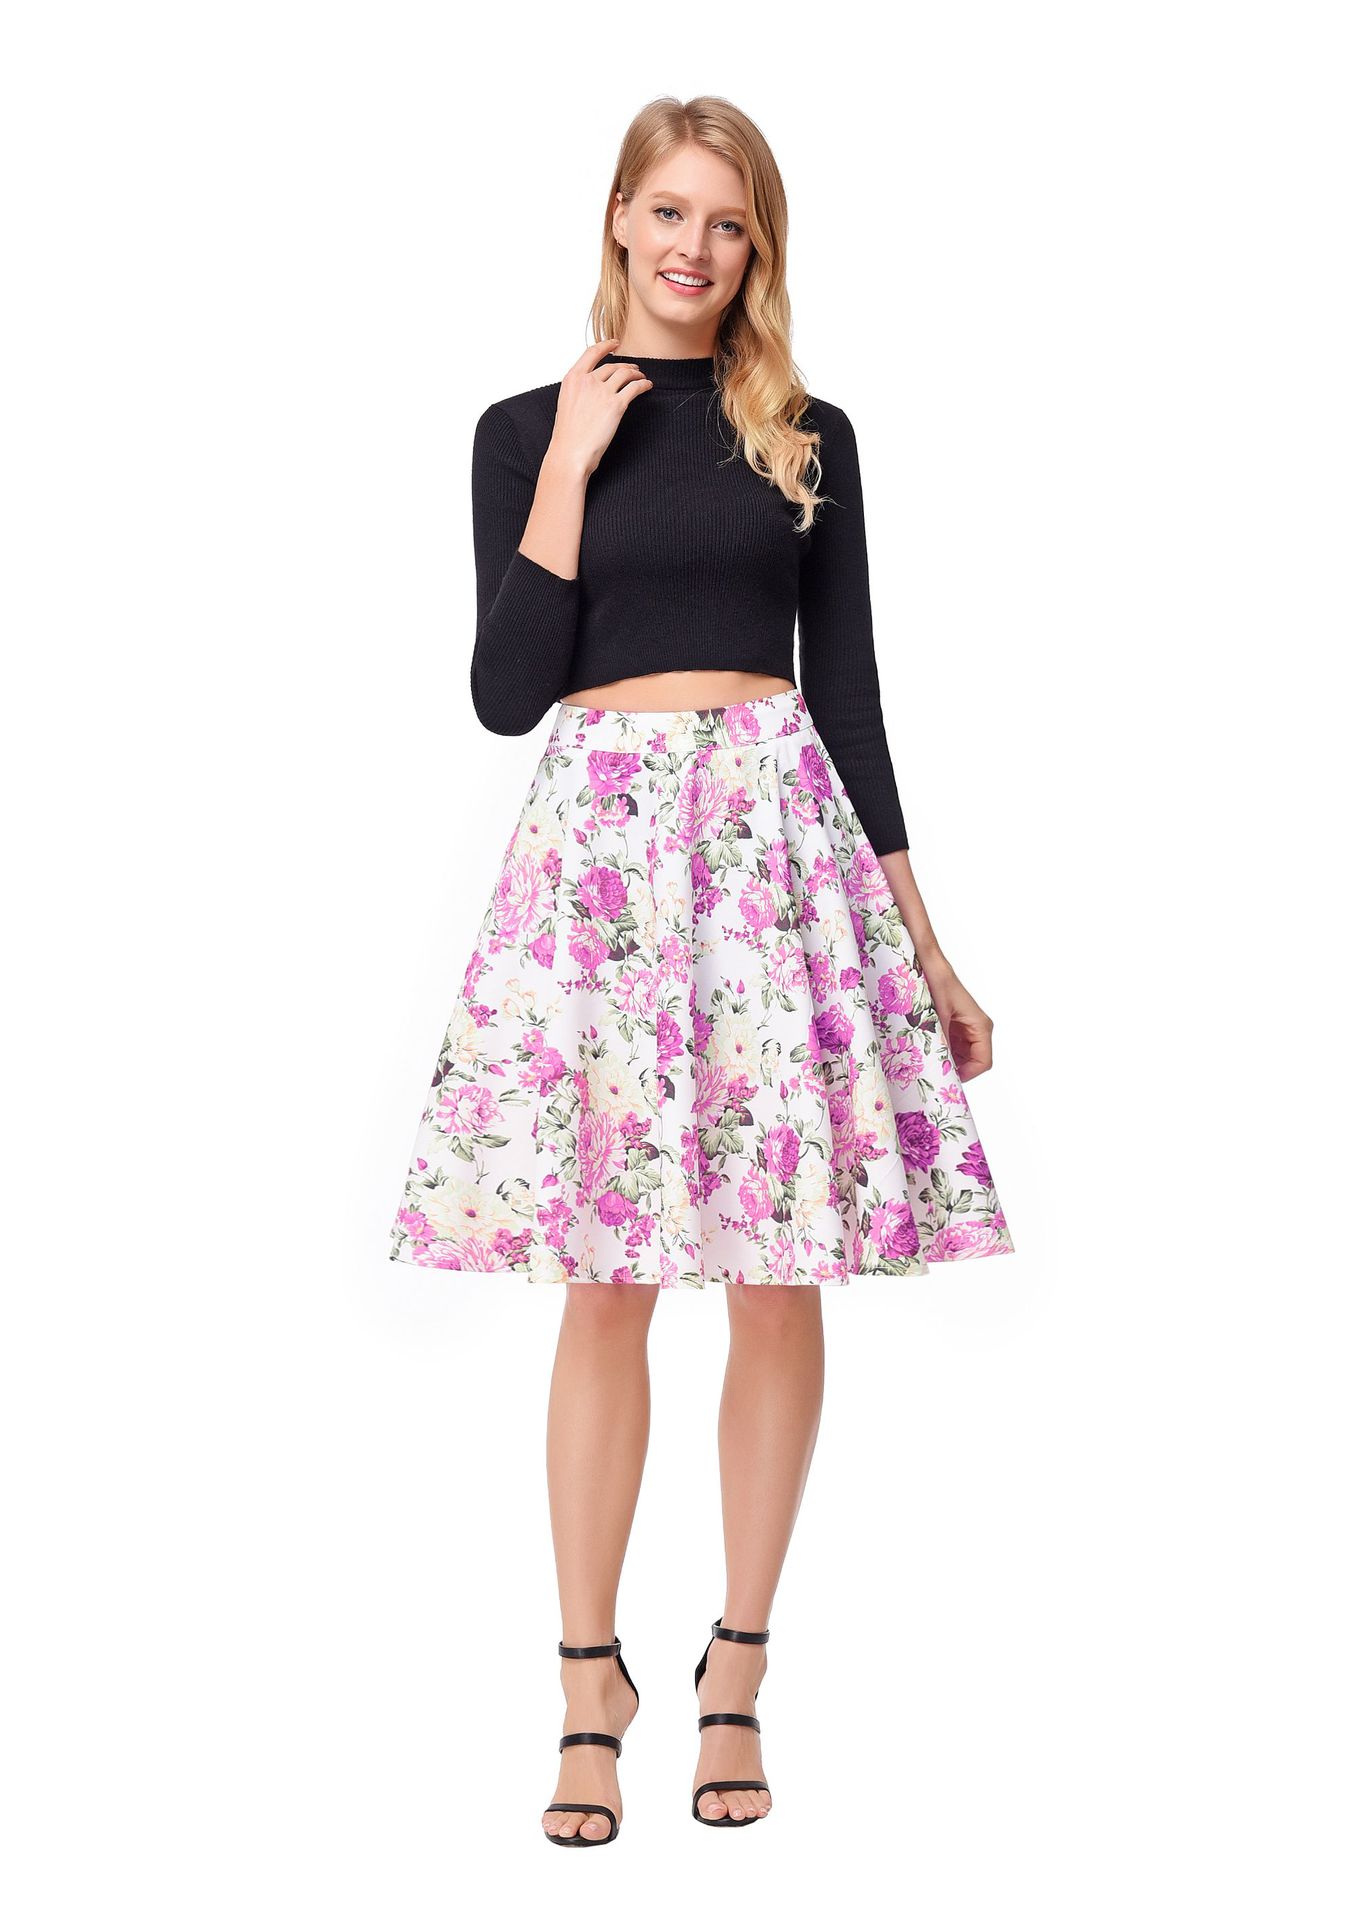 SZ60139-1  Vintage High Waist A-Line Rose Print Skirt